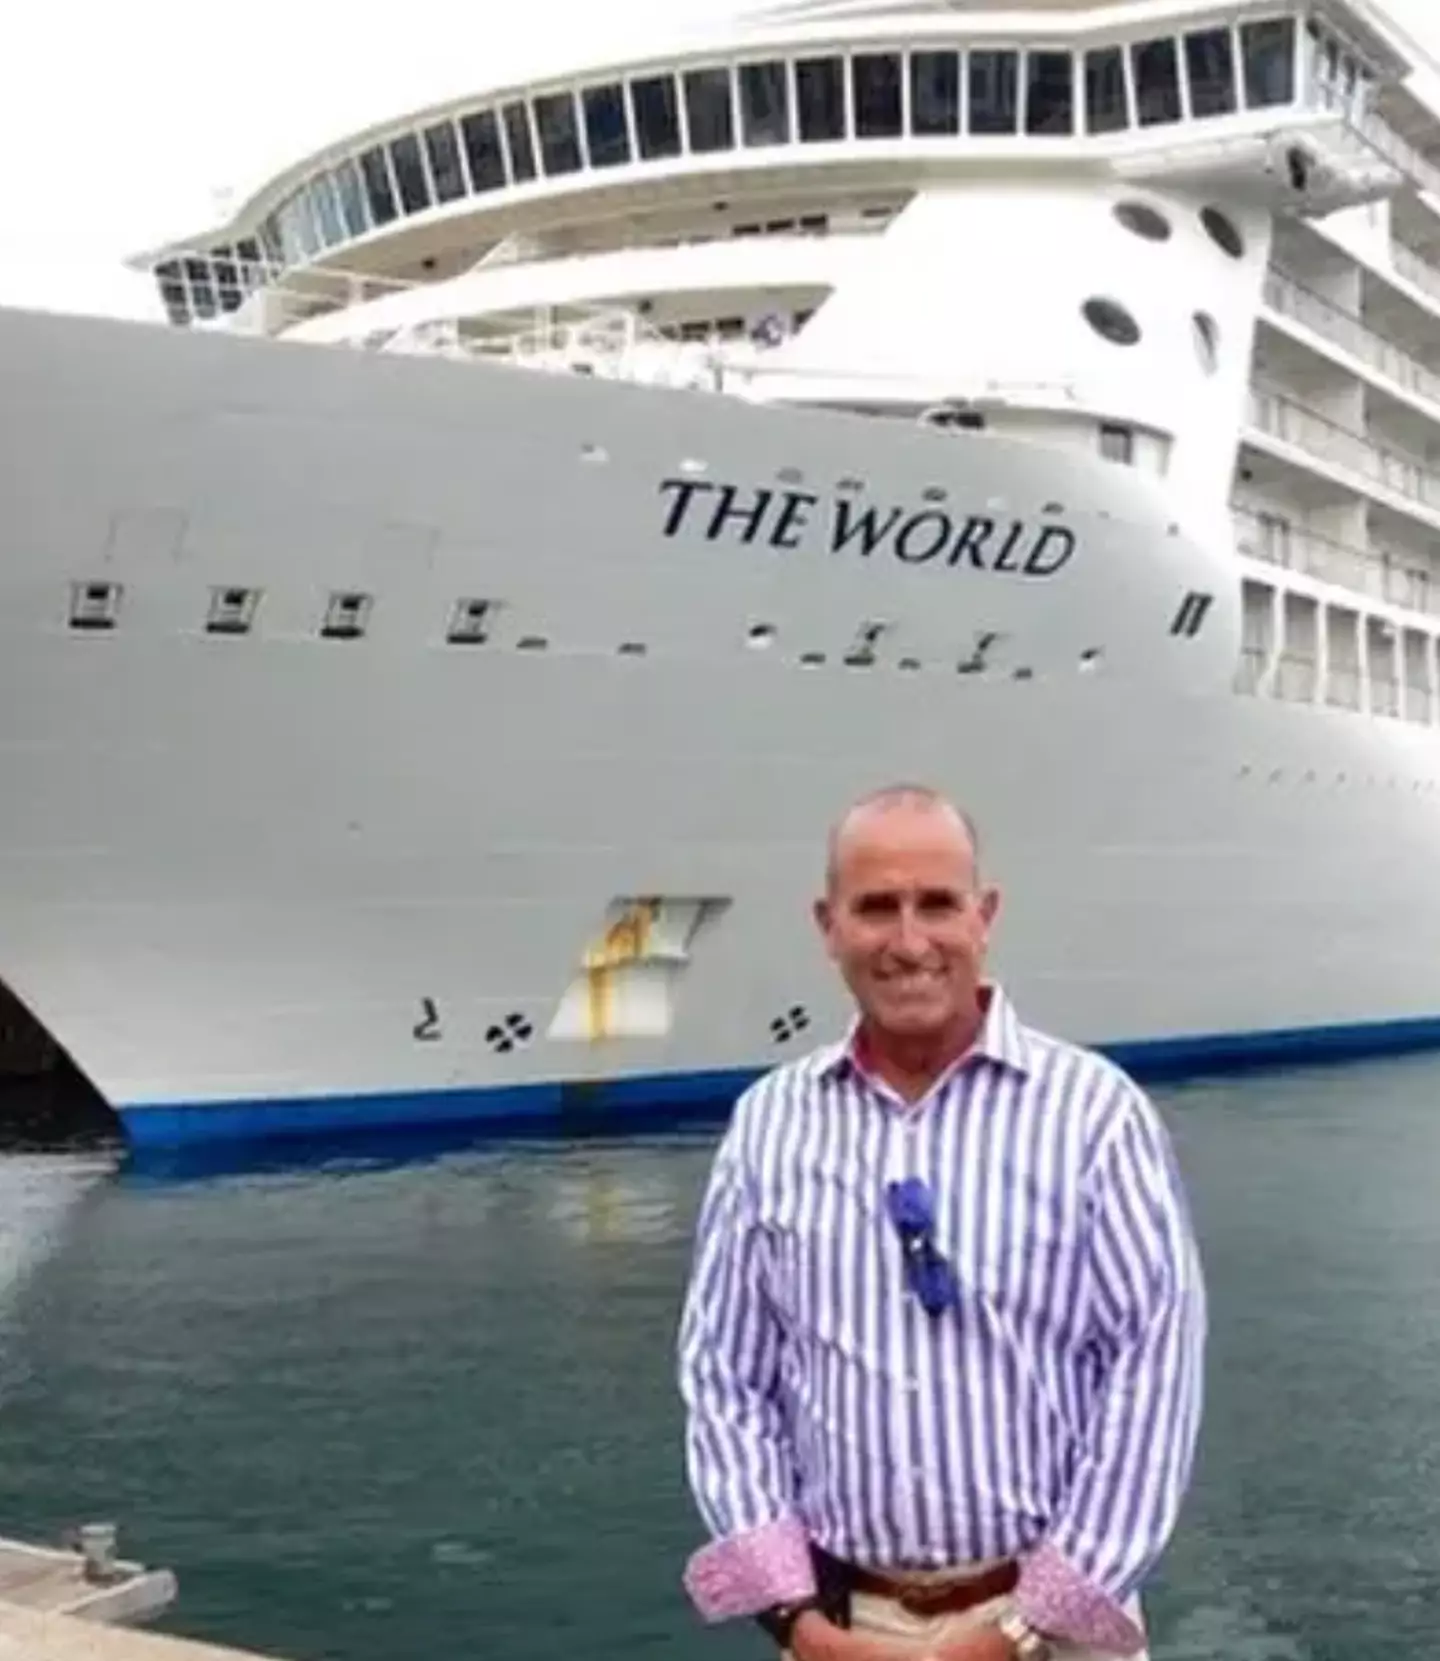 Antonucci spent 6 years on The World cruise ship.